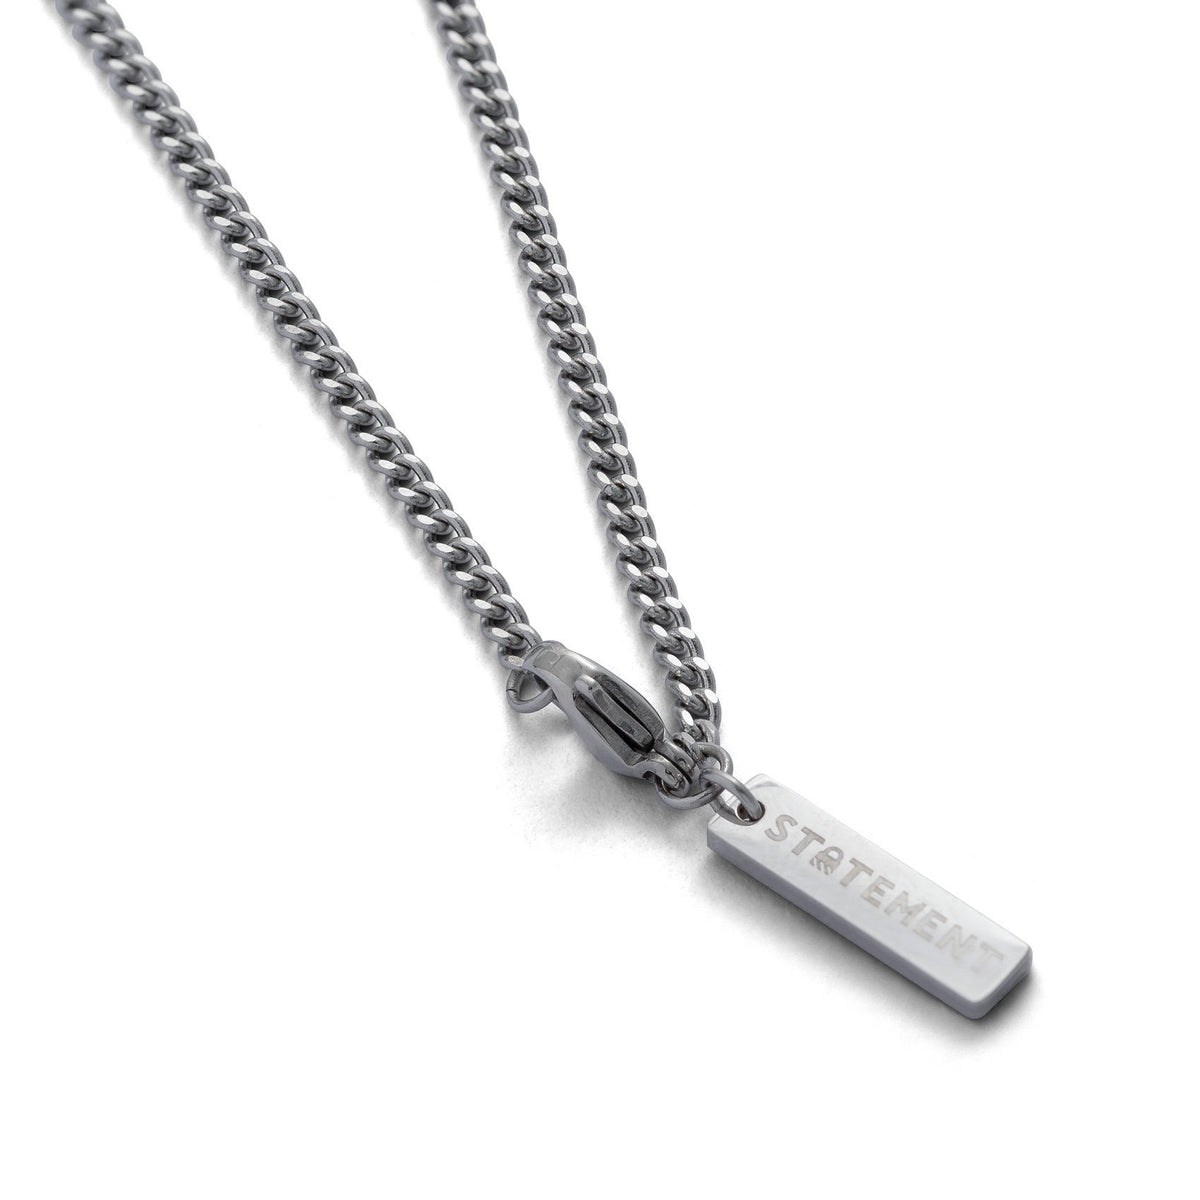 2mm Necklace Chain STATEMENT 